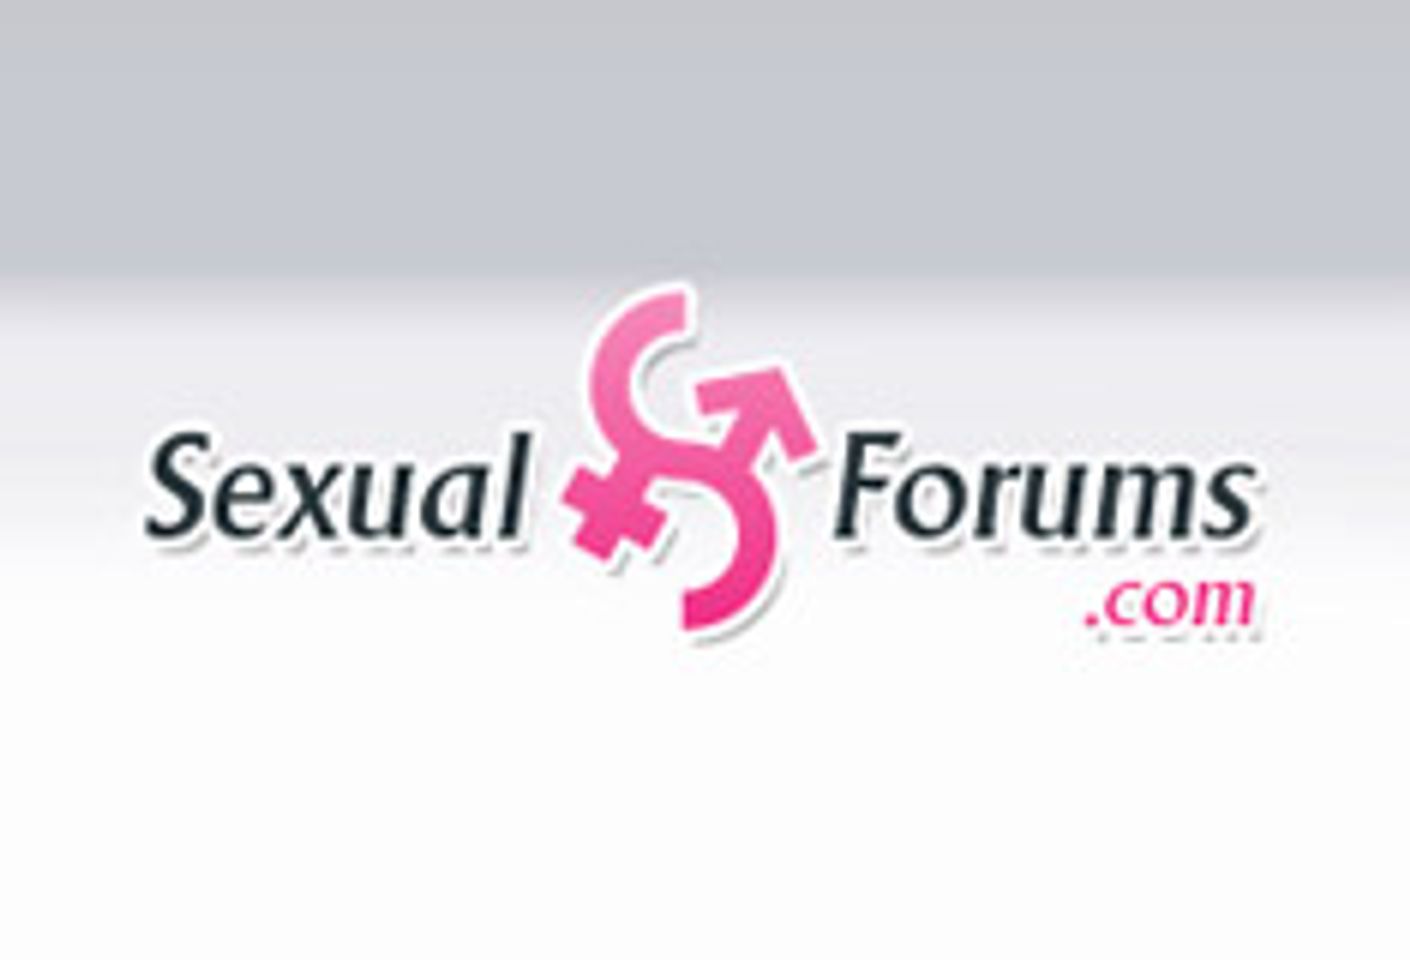 SexualForums.com Celebrates Three Years